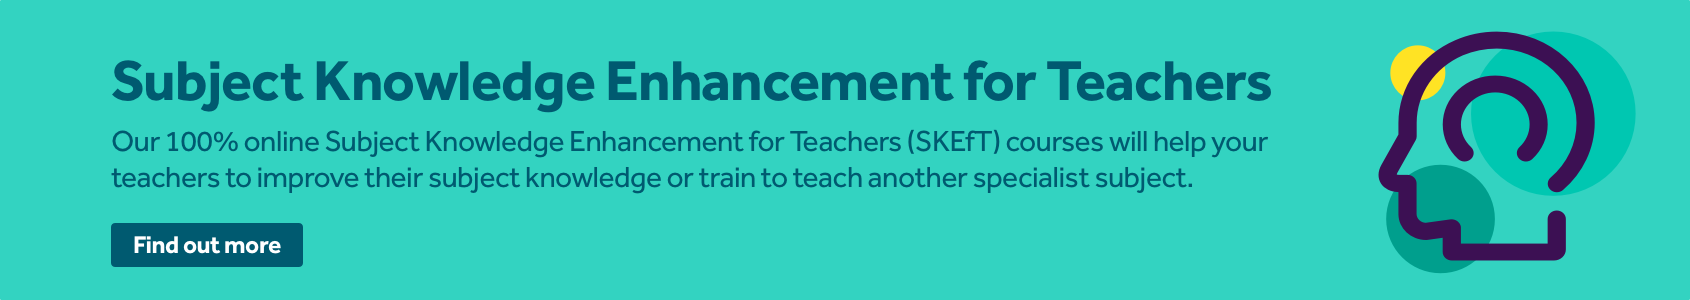 Tes Subject Knowledge Enhancement for teachers